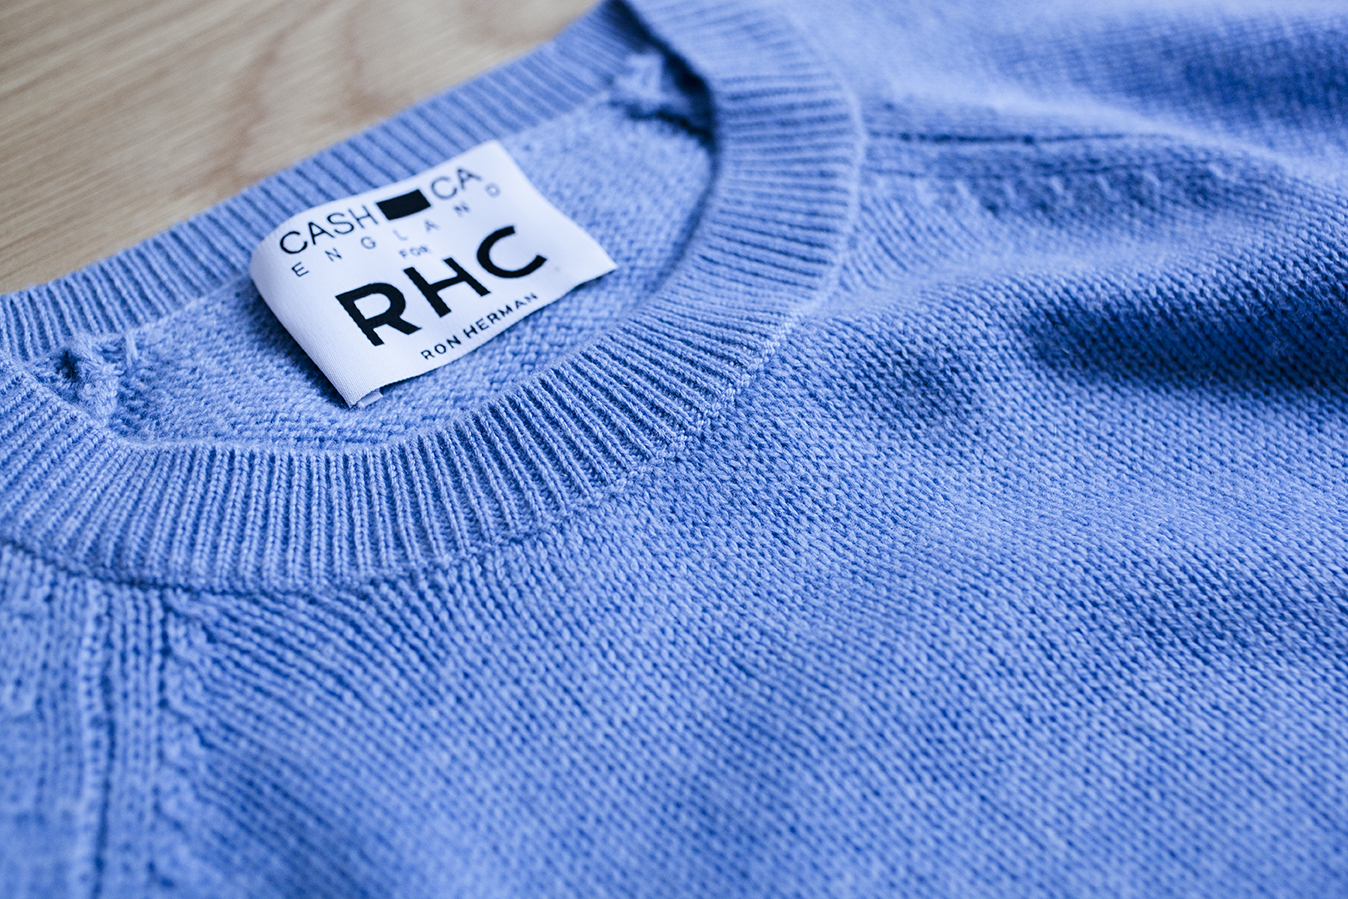 CASH CA for RHC
Cashmere Knit